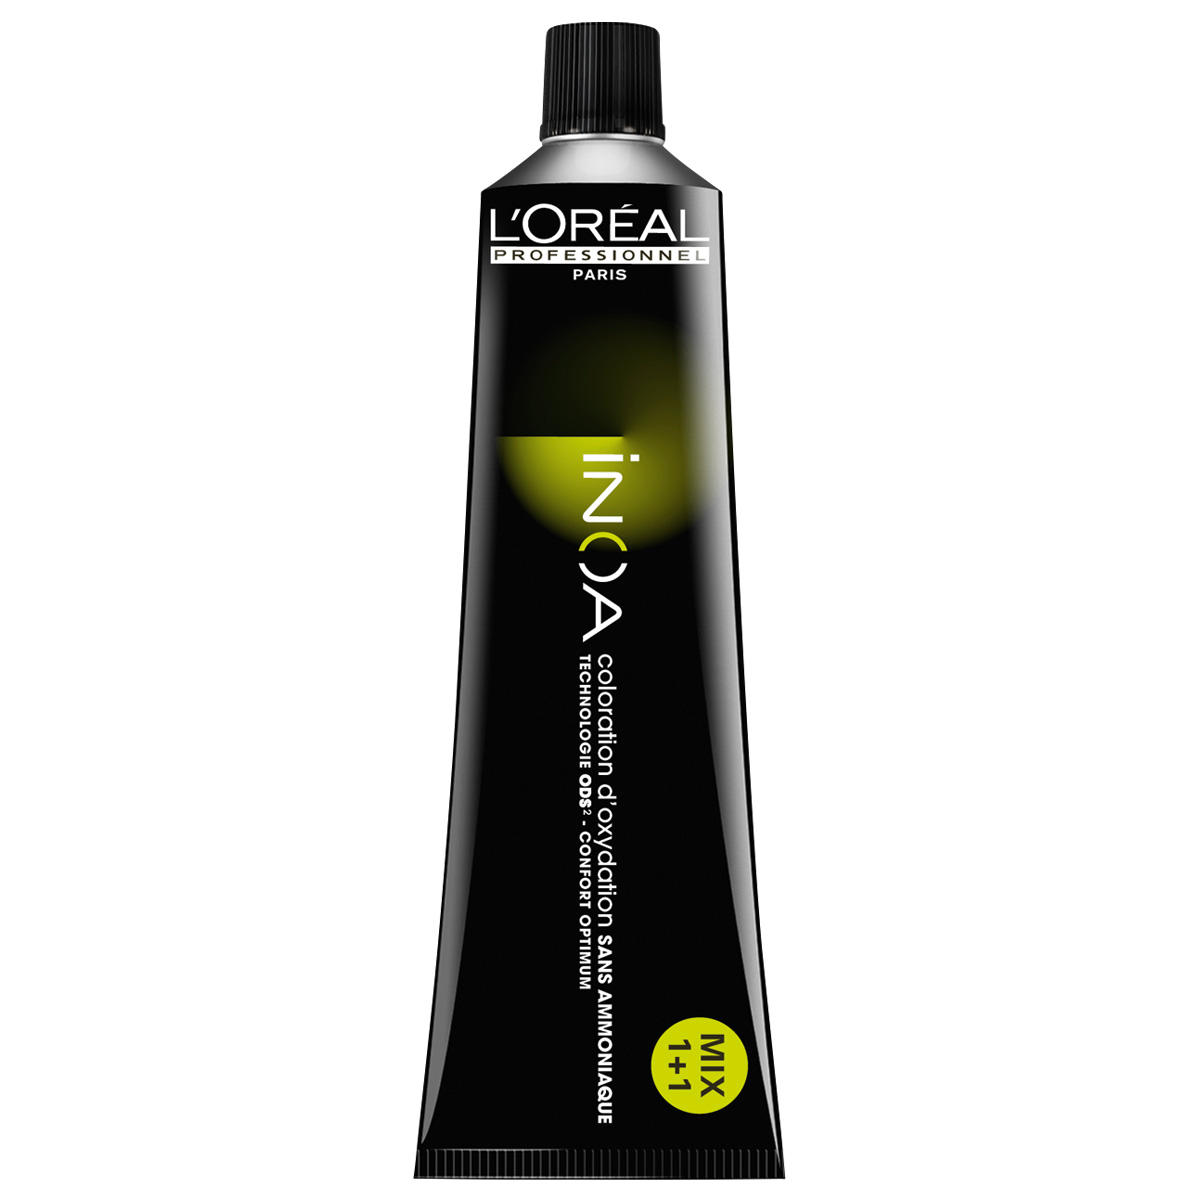 L'Oréal Professionnel Paris Coloration 8.3 Rubio claro dorado, tubo 60 ml